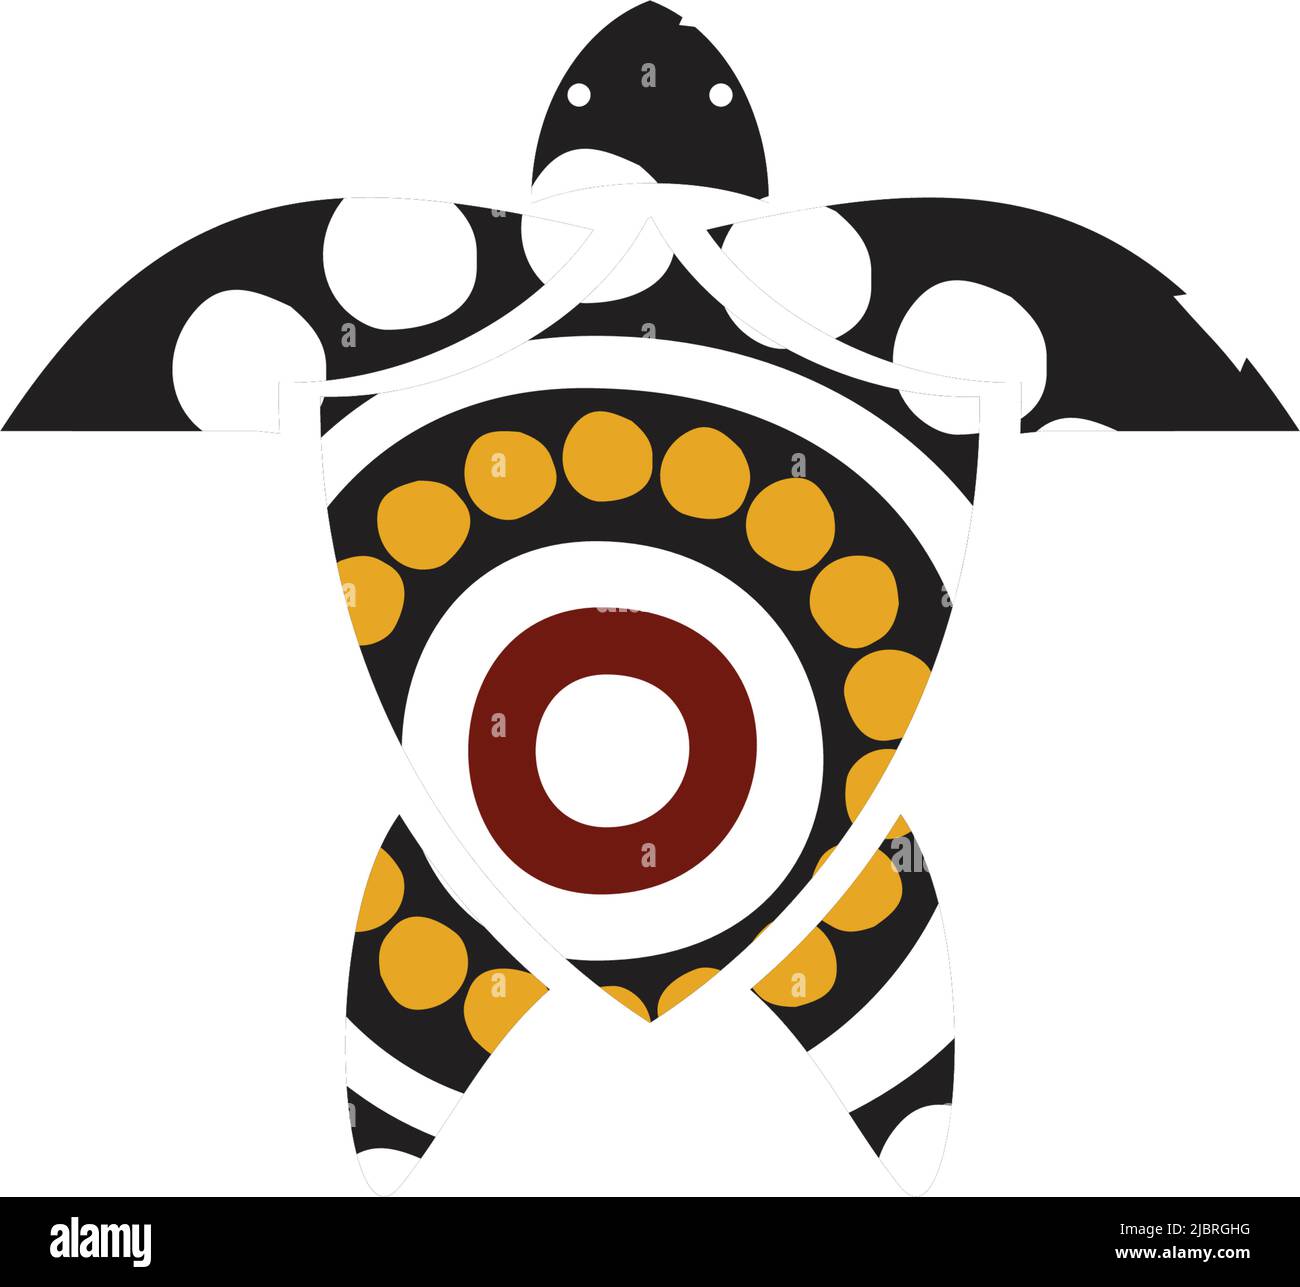 Kangaroo icon with aboriginal art design style vector template Stock ...